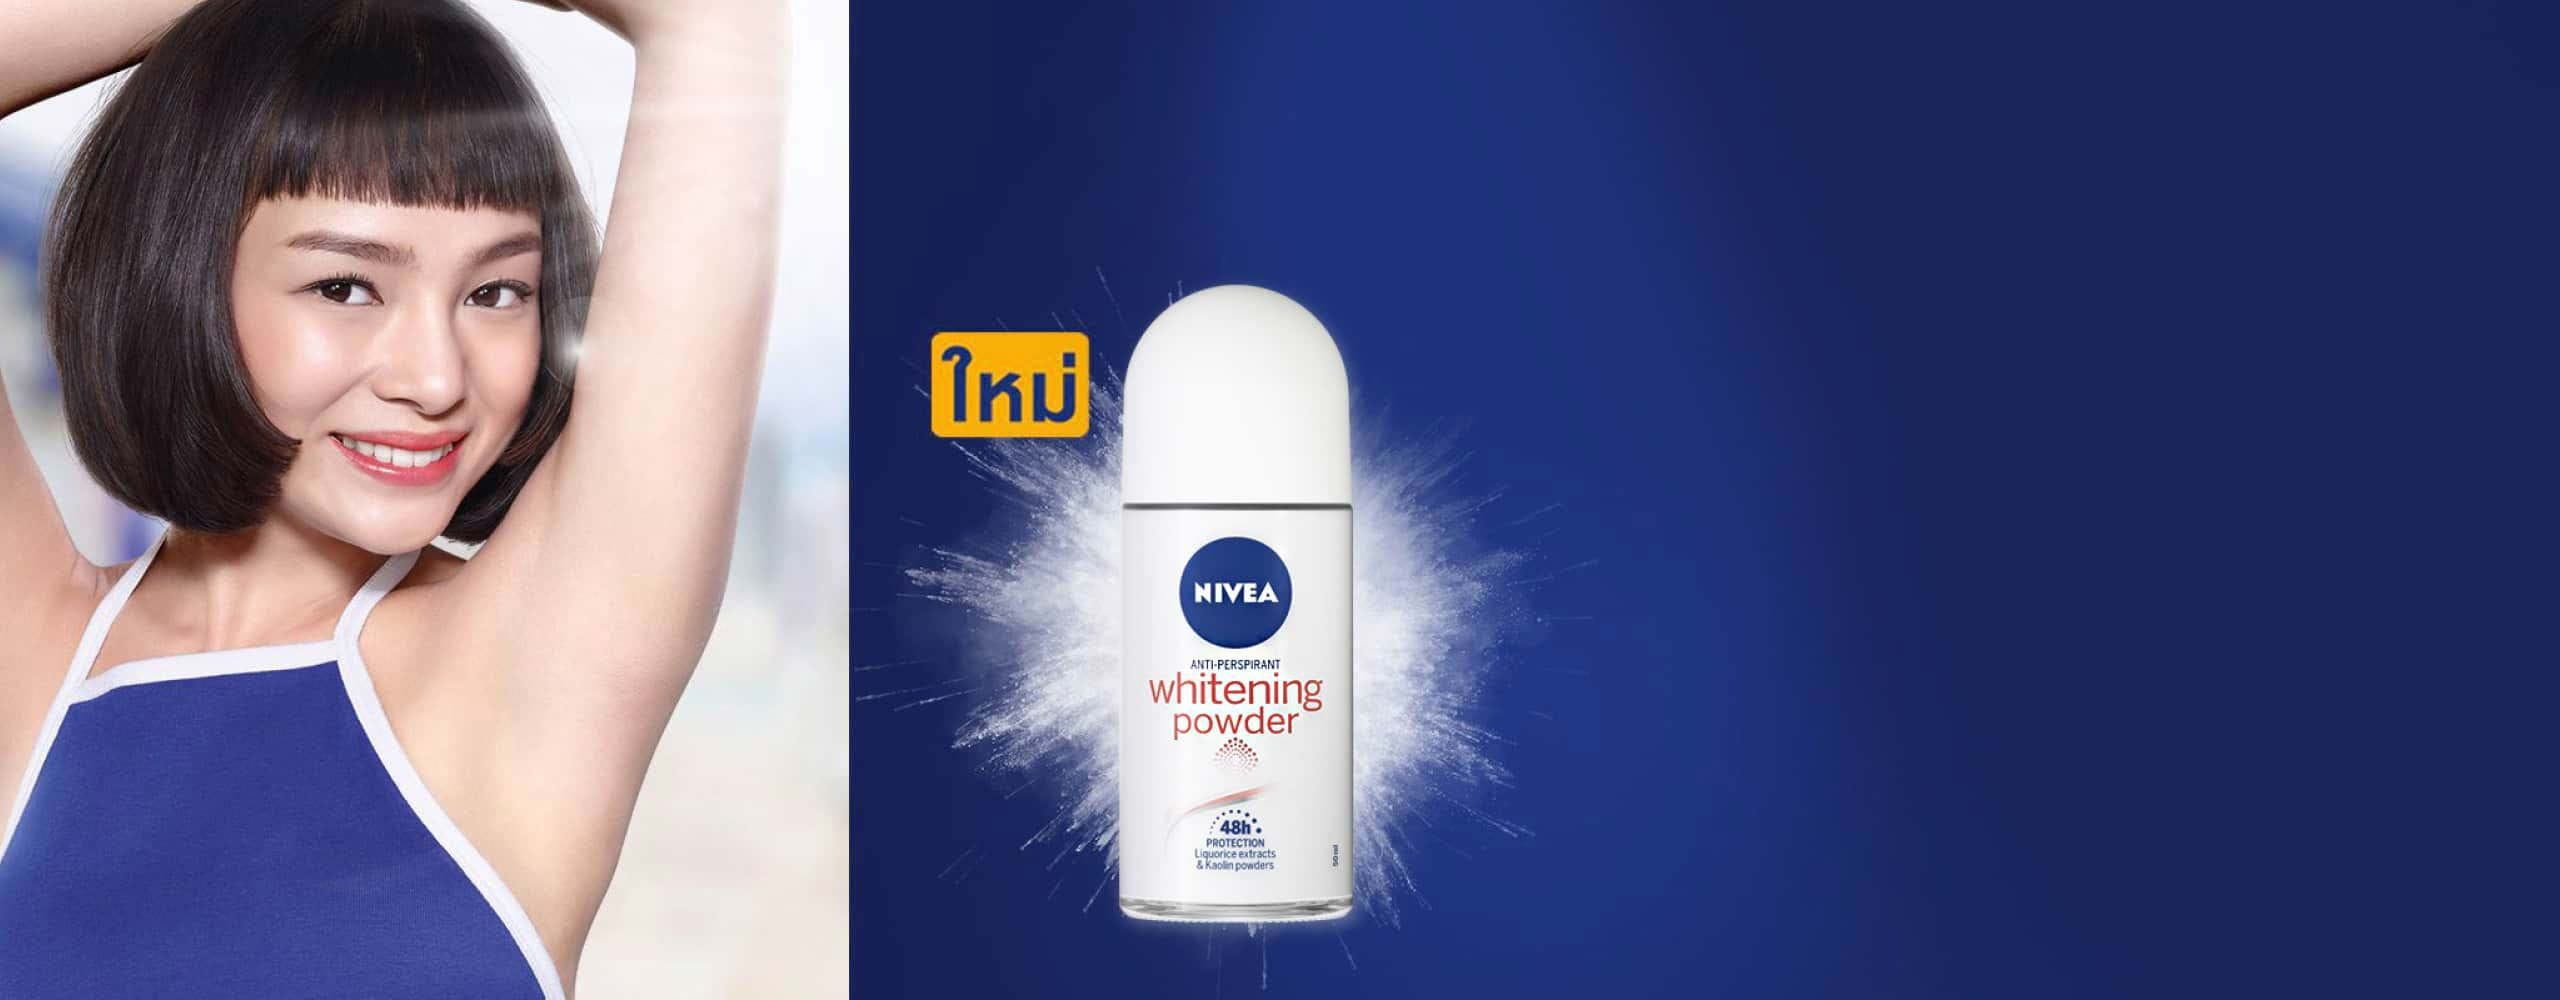 NIVEA whitening powder